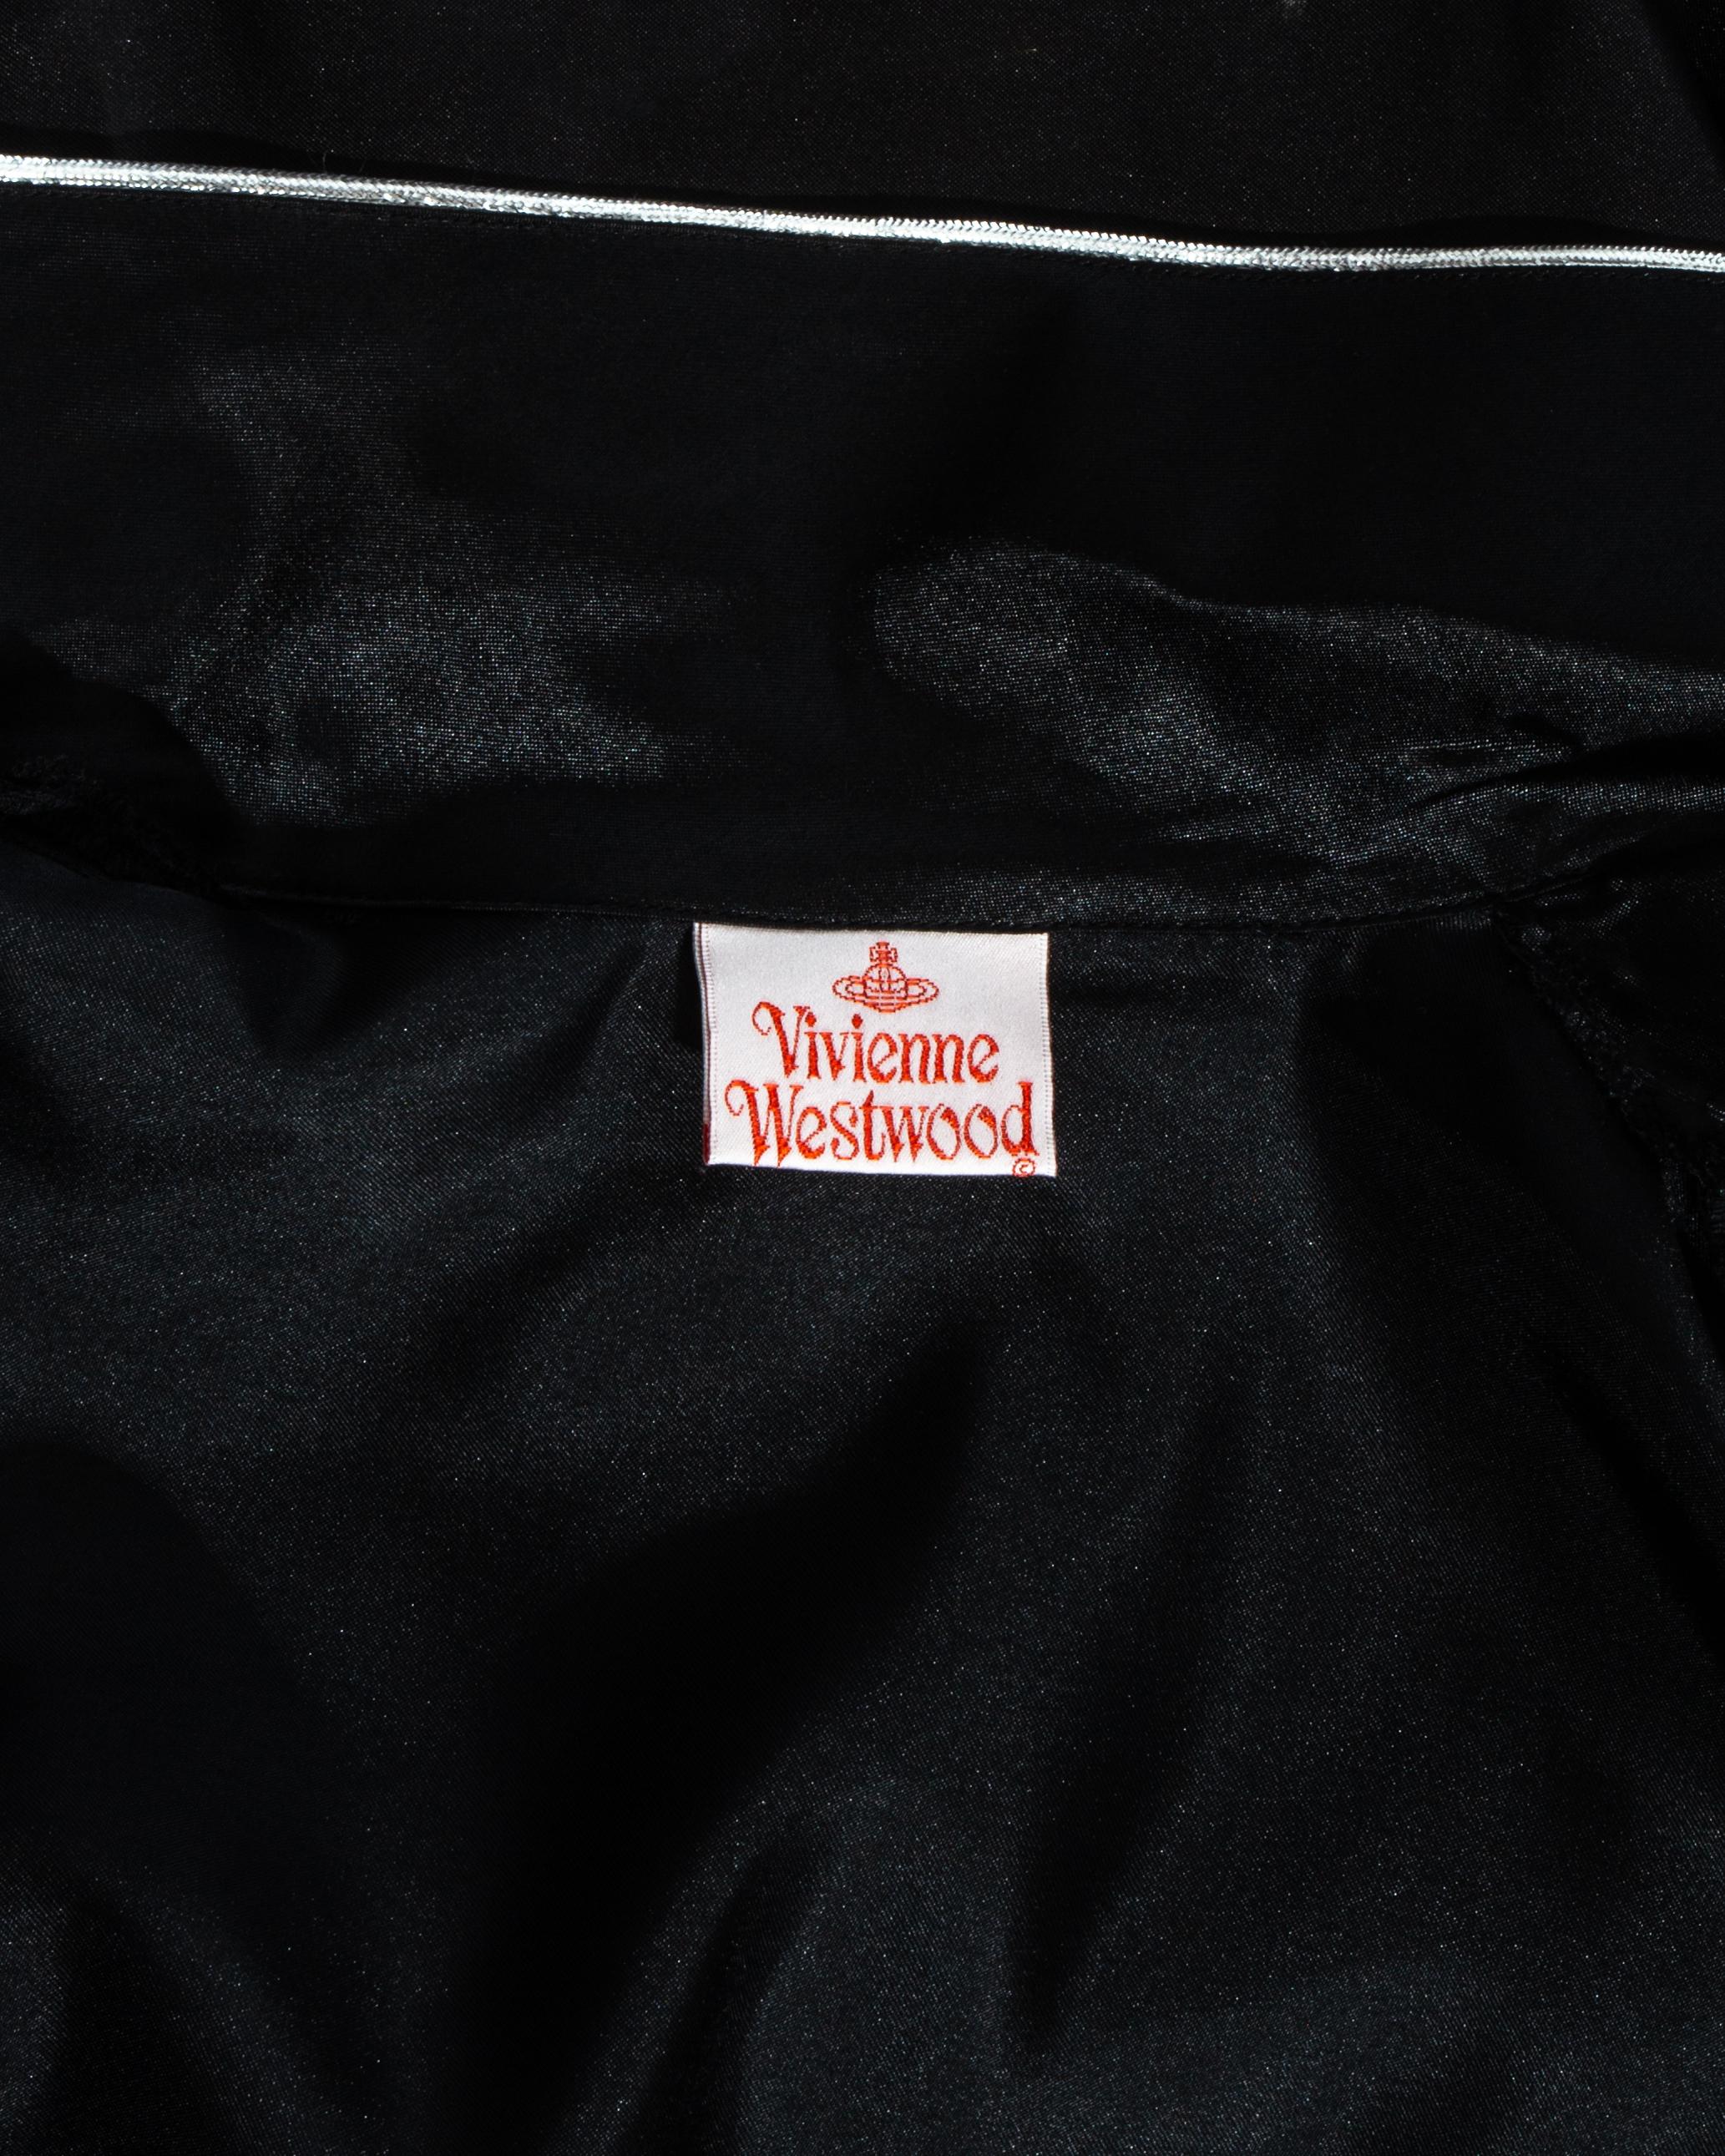 Vivienne Westwood black embroidered 3 piece pyjama suit, ss 1993 For Sale 2